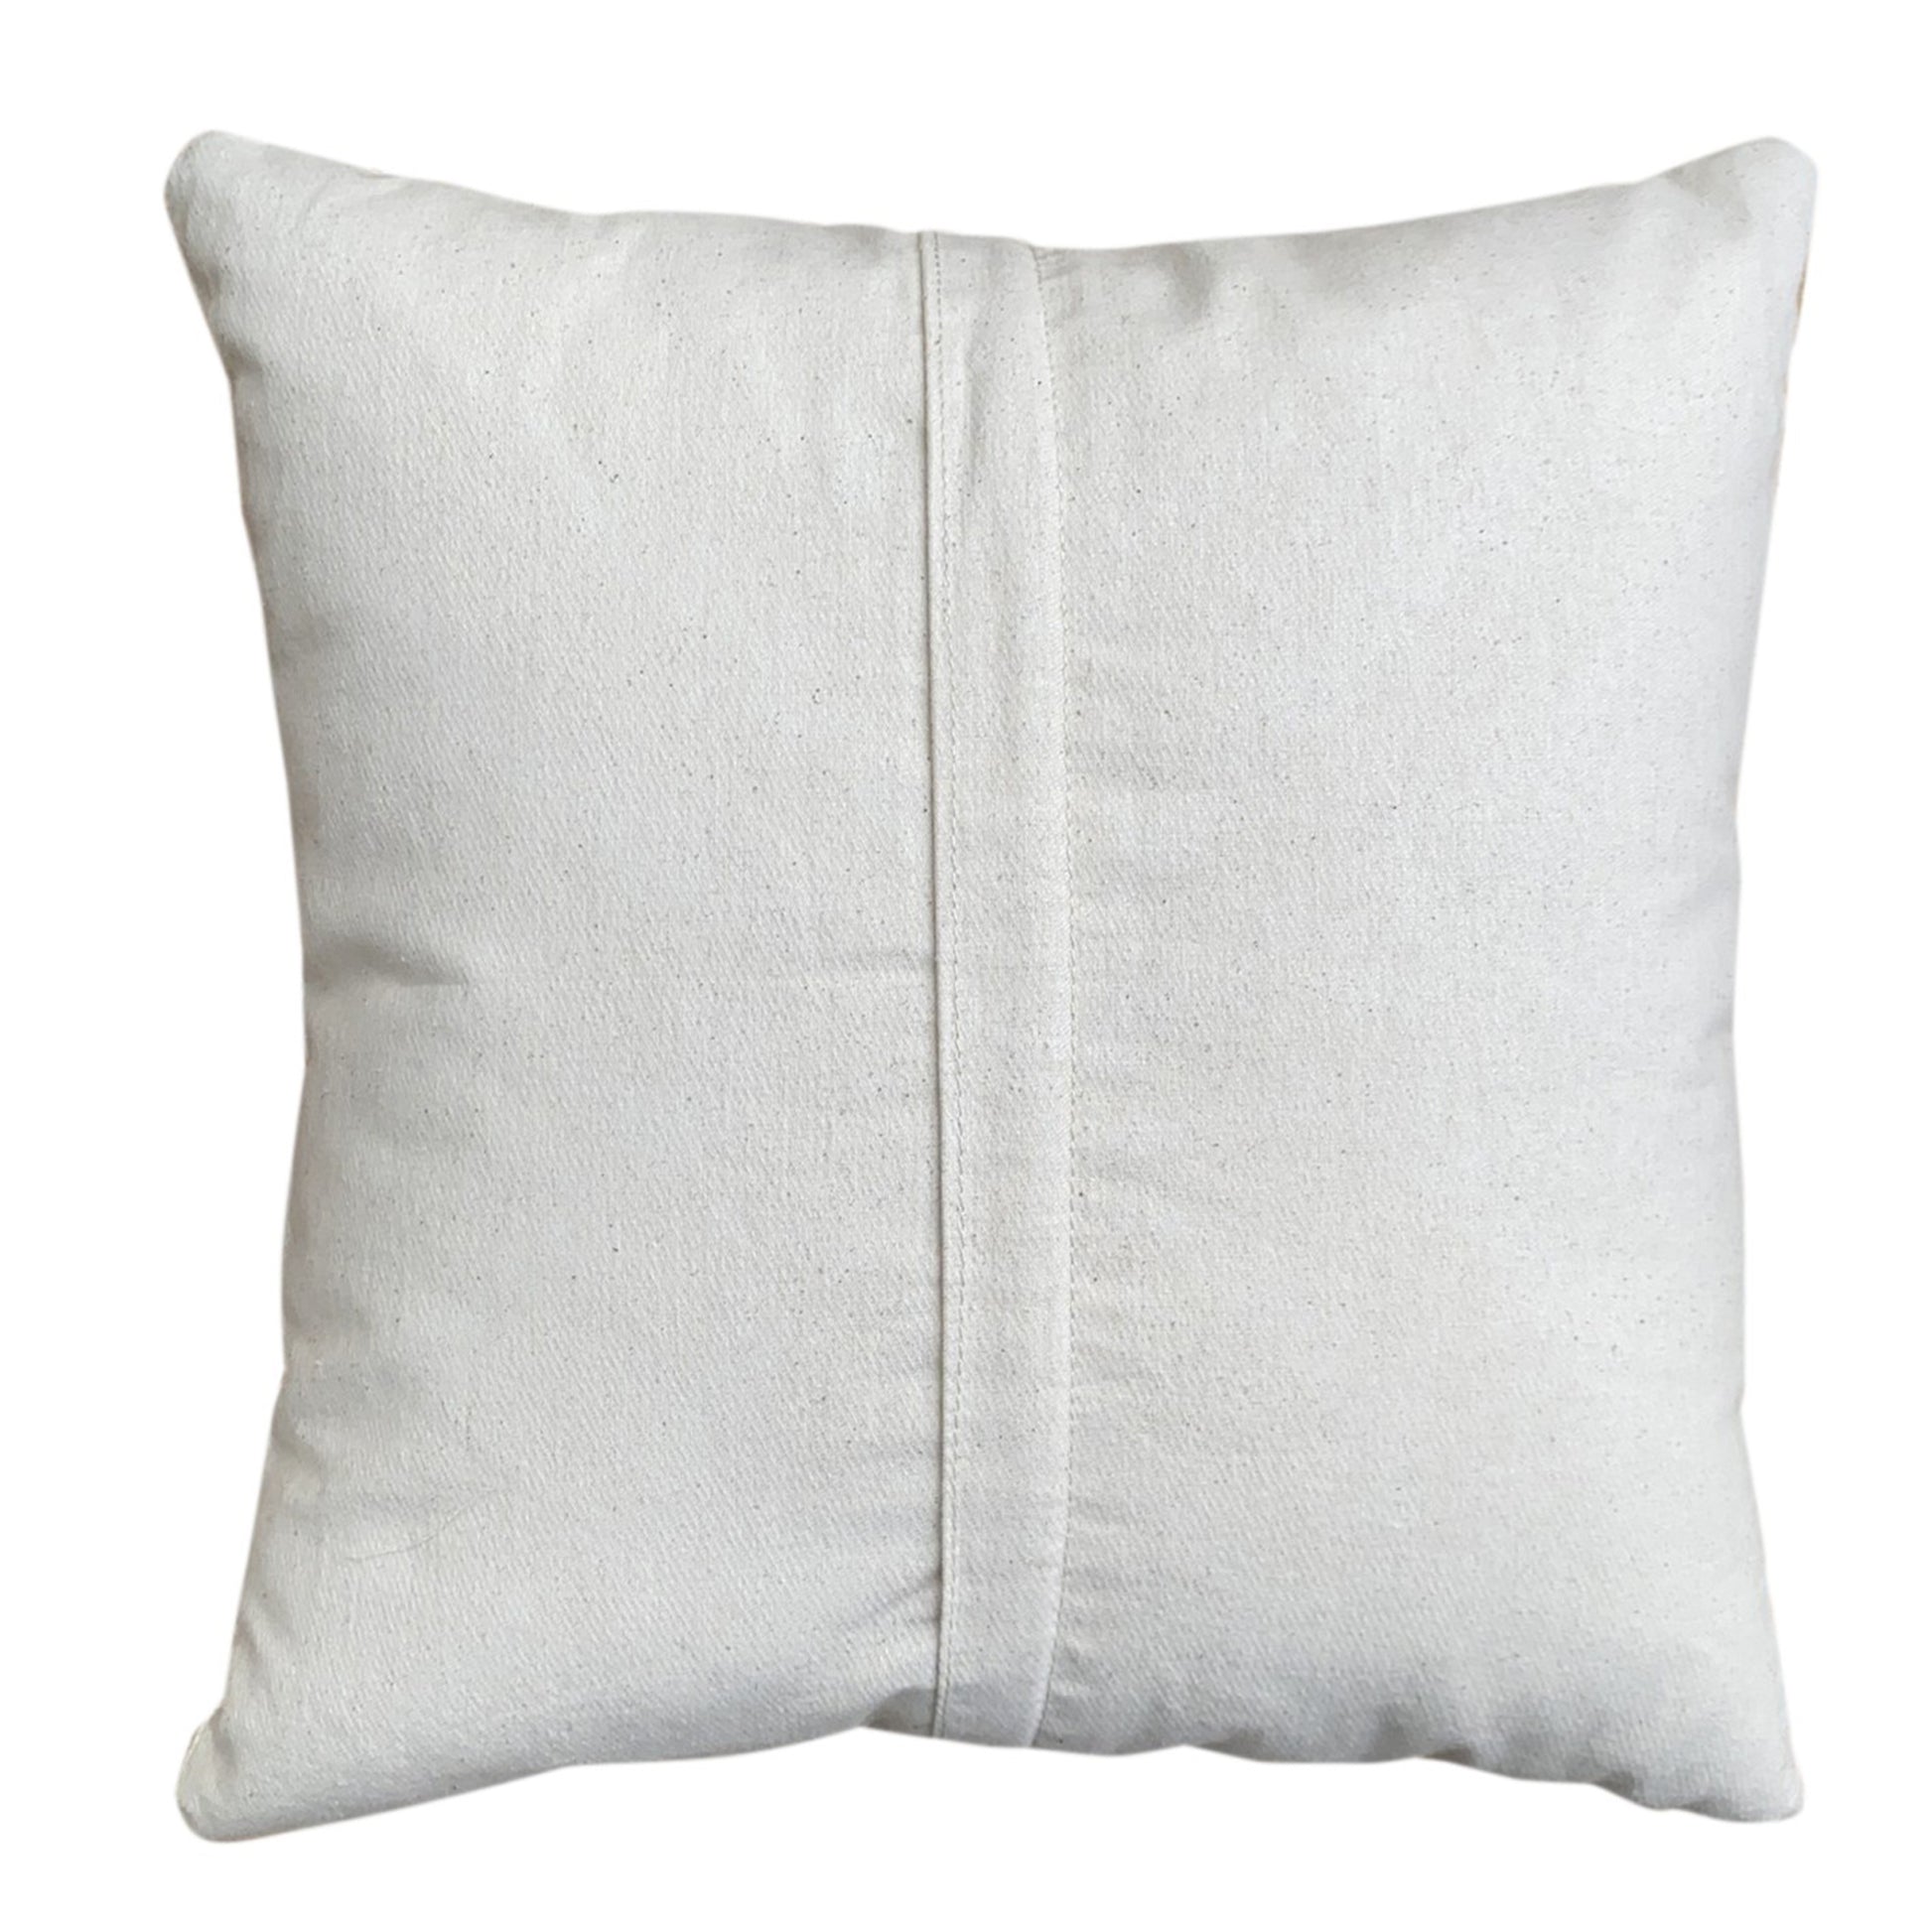 17 x 17 Inch 2 Piece Square Cotton Accent Throw Pillow white-cotton